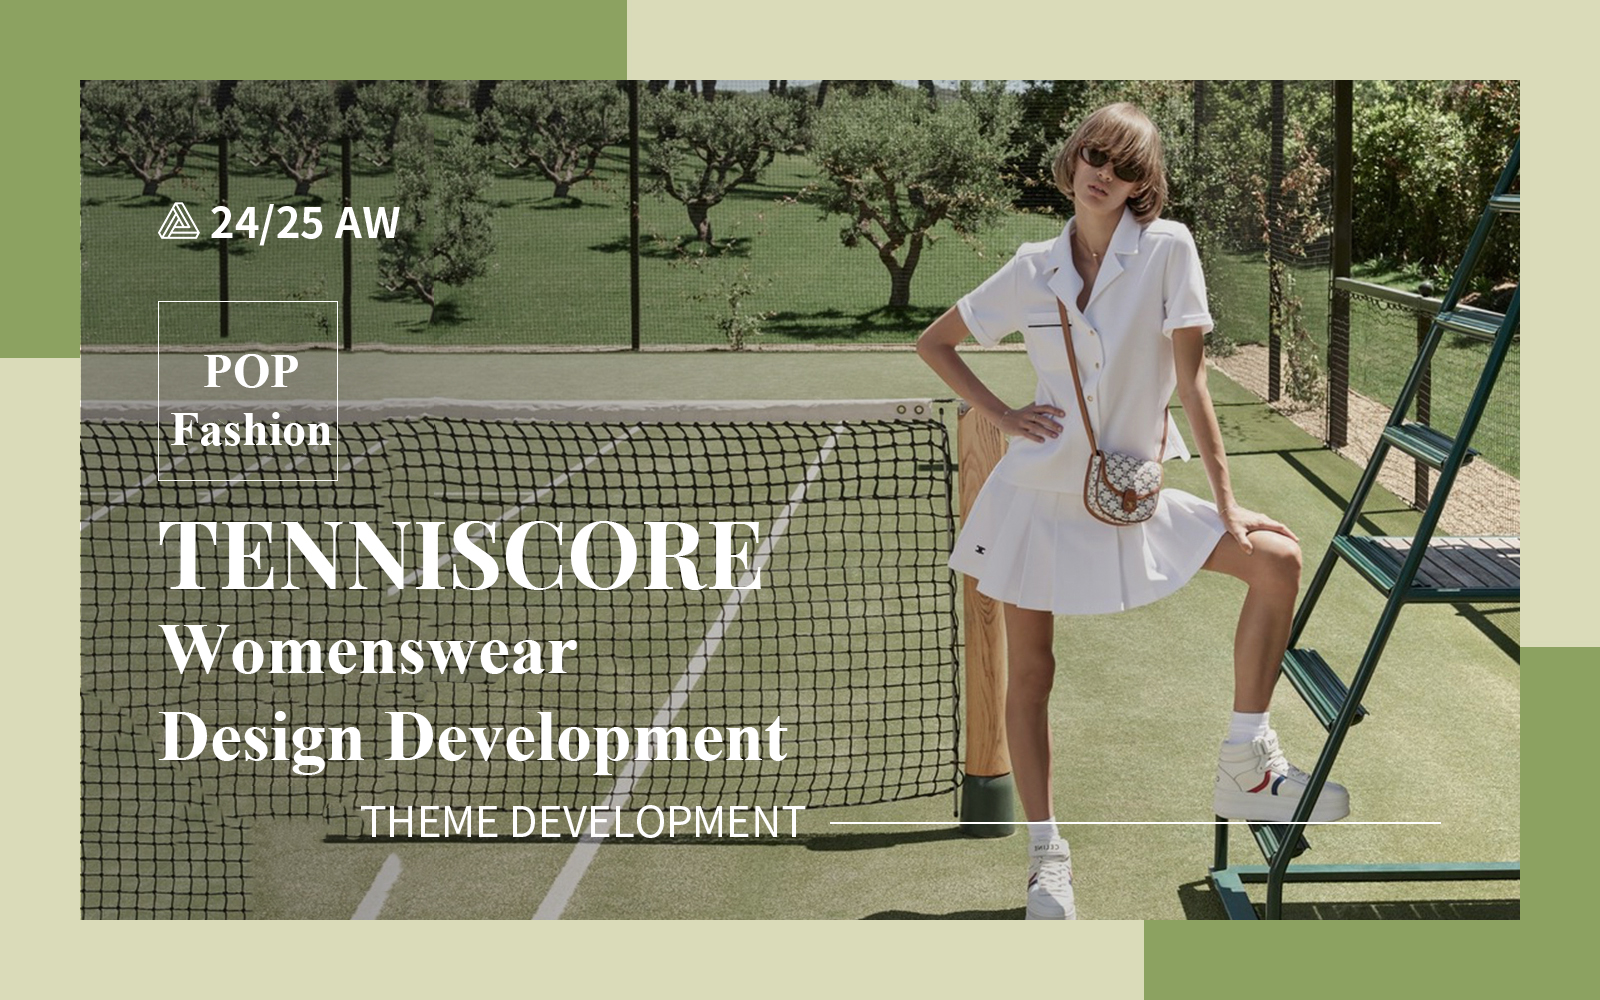 Tenniscore -- The Design Development of Womenswear